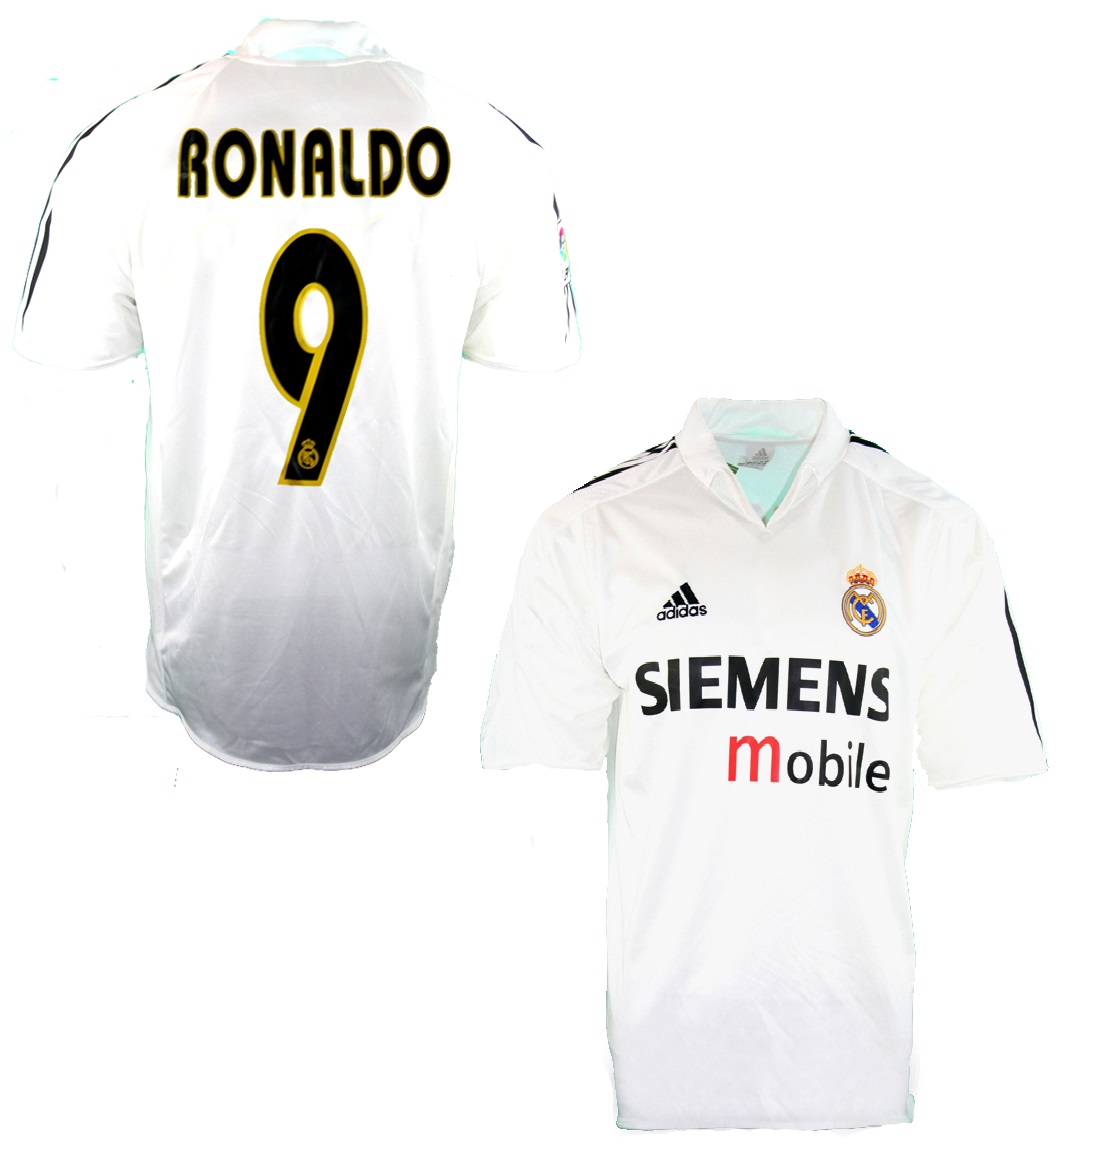 ronaldo real madrid jersey